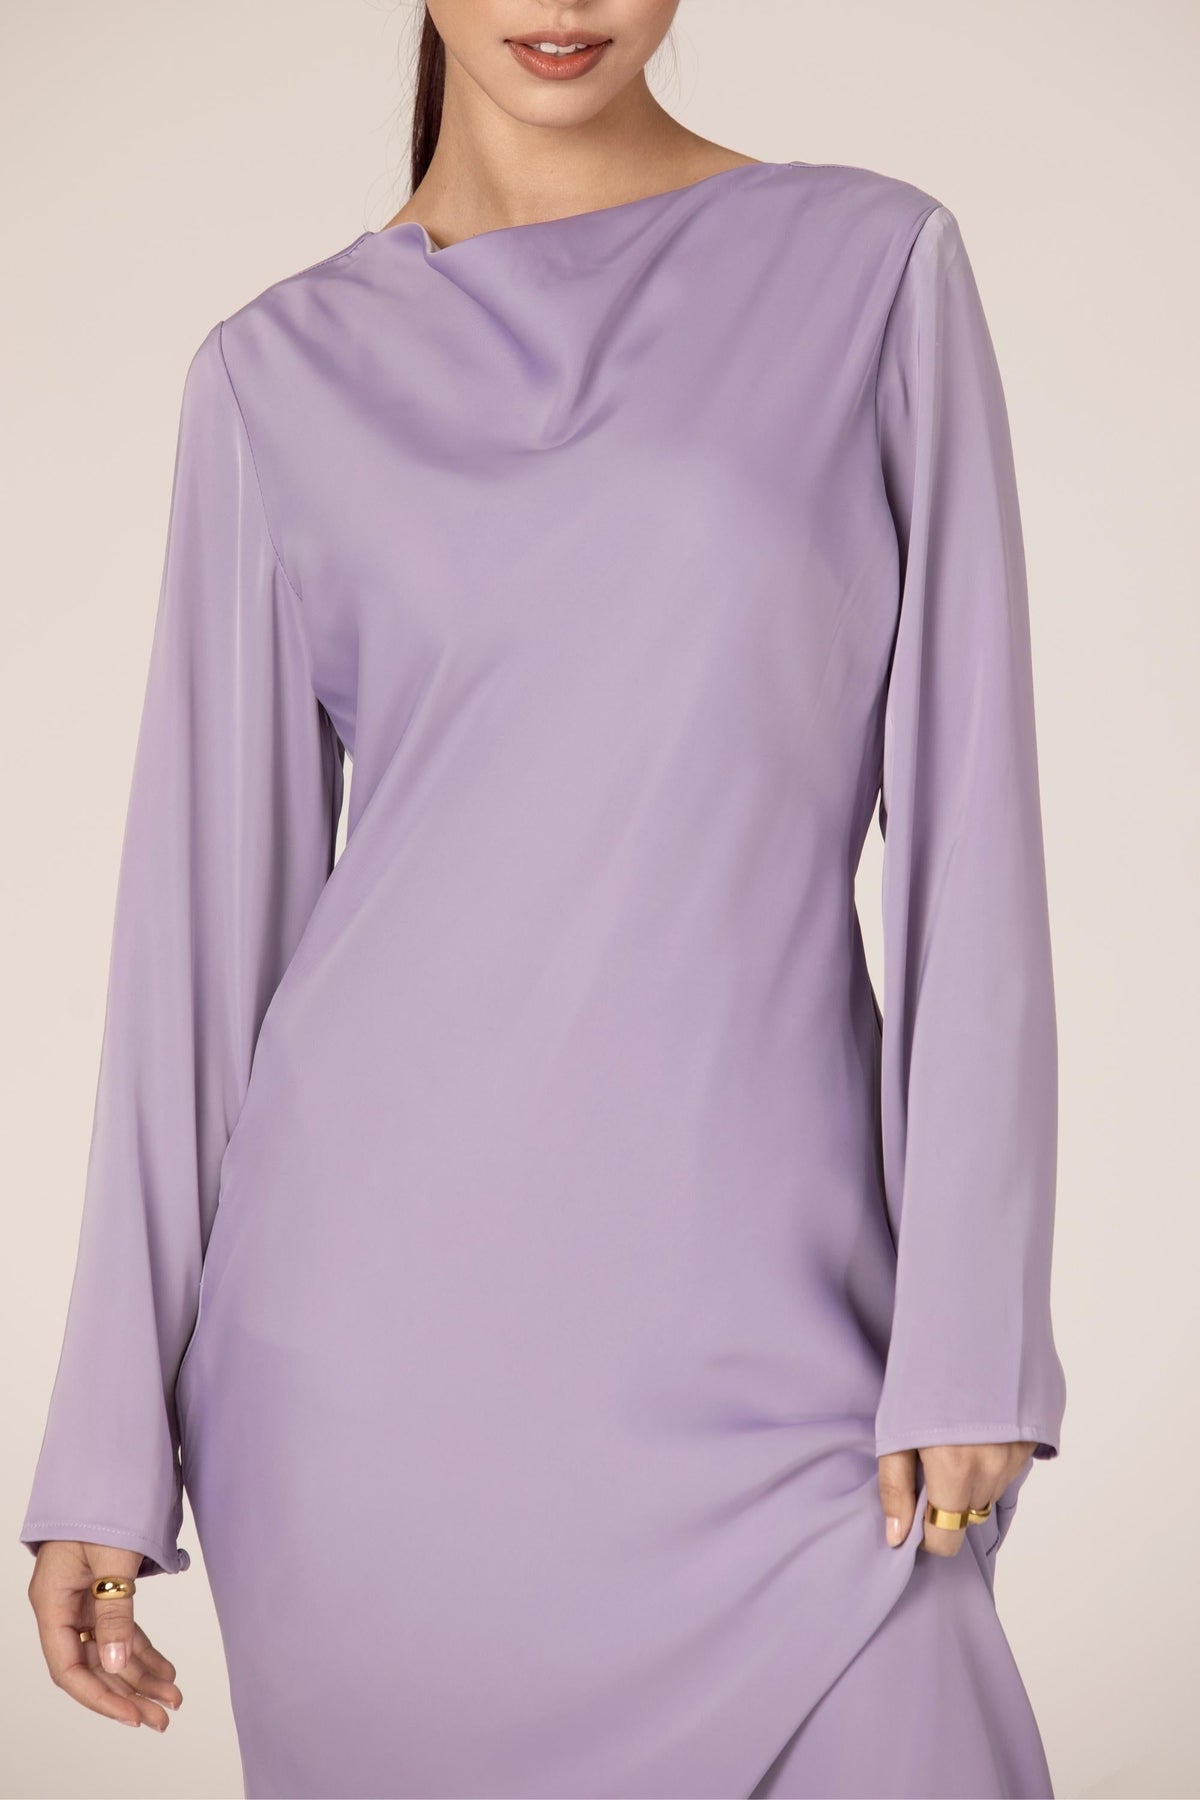 Aysha Satin Maxi Dress - Lavender Dresses epschoolboard 